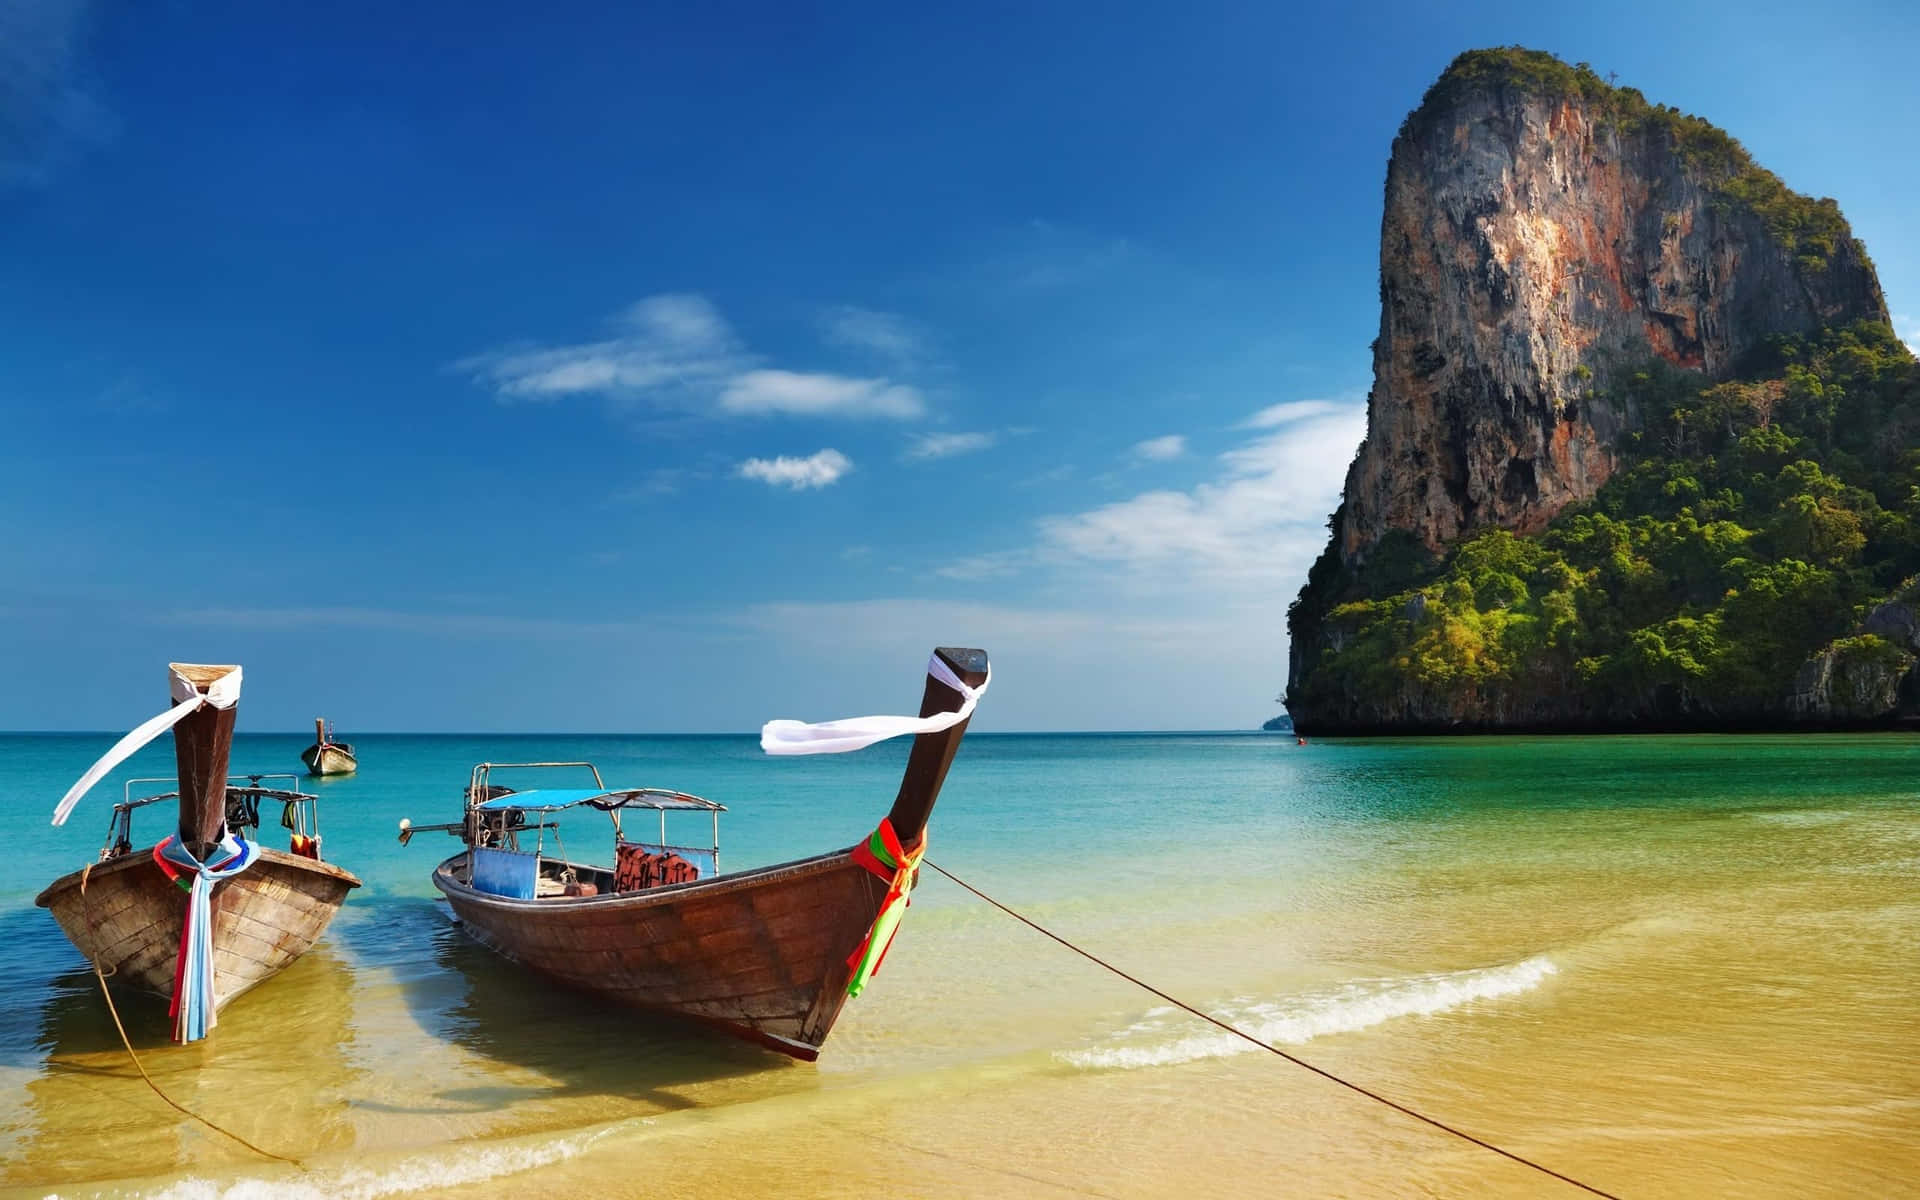 "Take a breathtaking journey to the cliffs of Krabi, Thailand!"